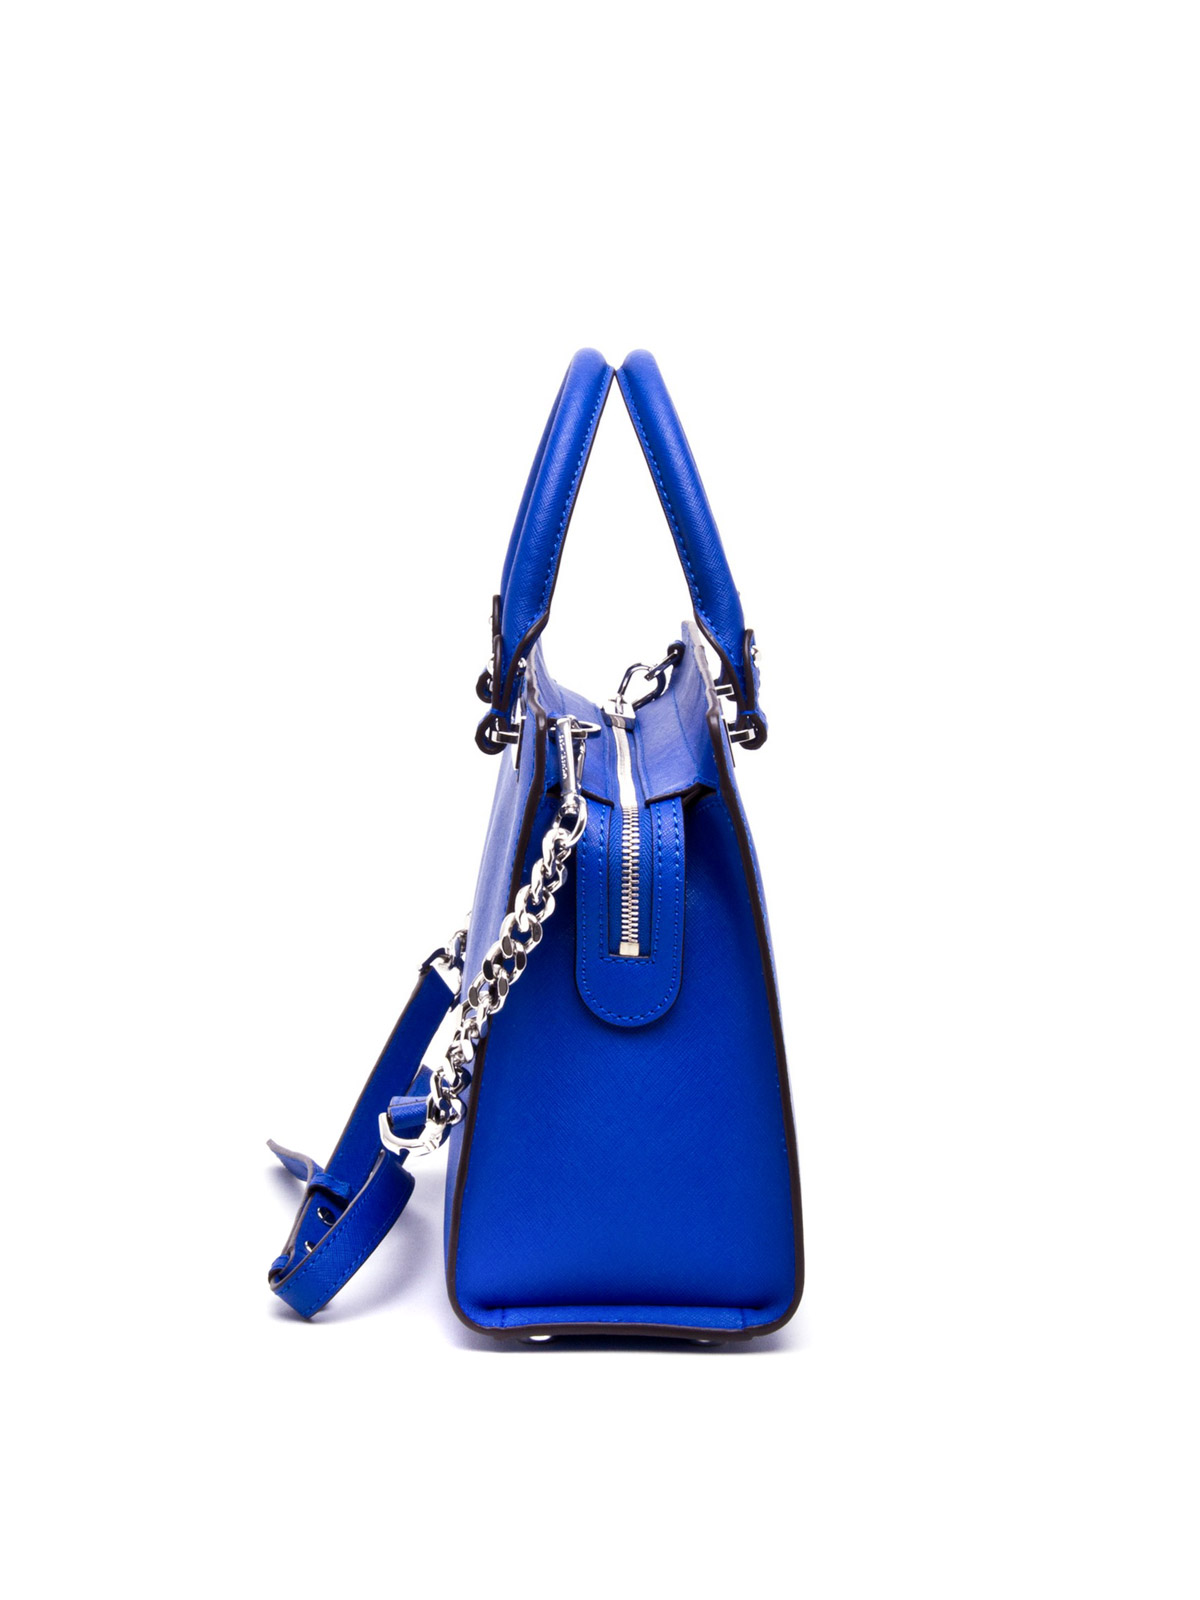 Michael Kors small Satchel Royal Blue | Satchel, Royal blue, Blue bags